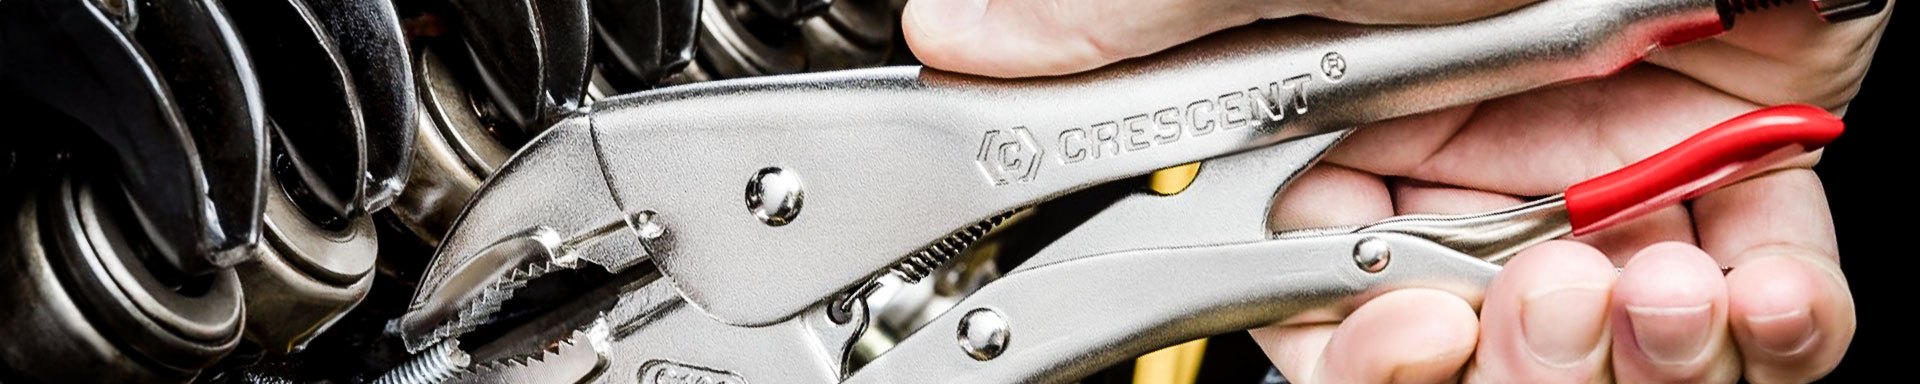 Crescent Ironworker Tools